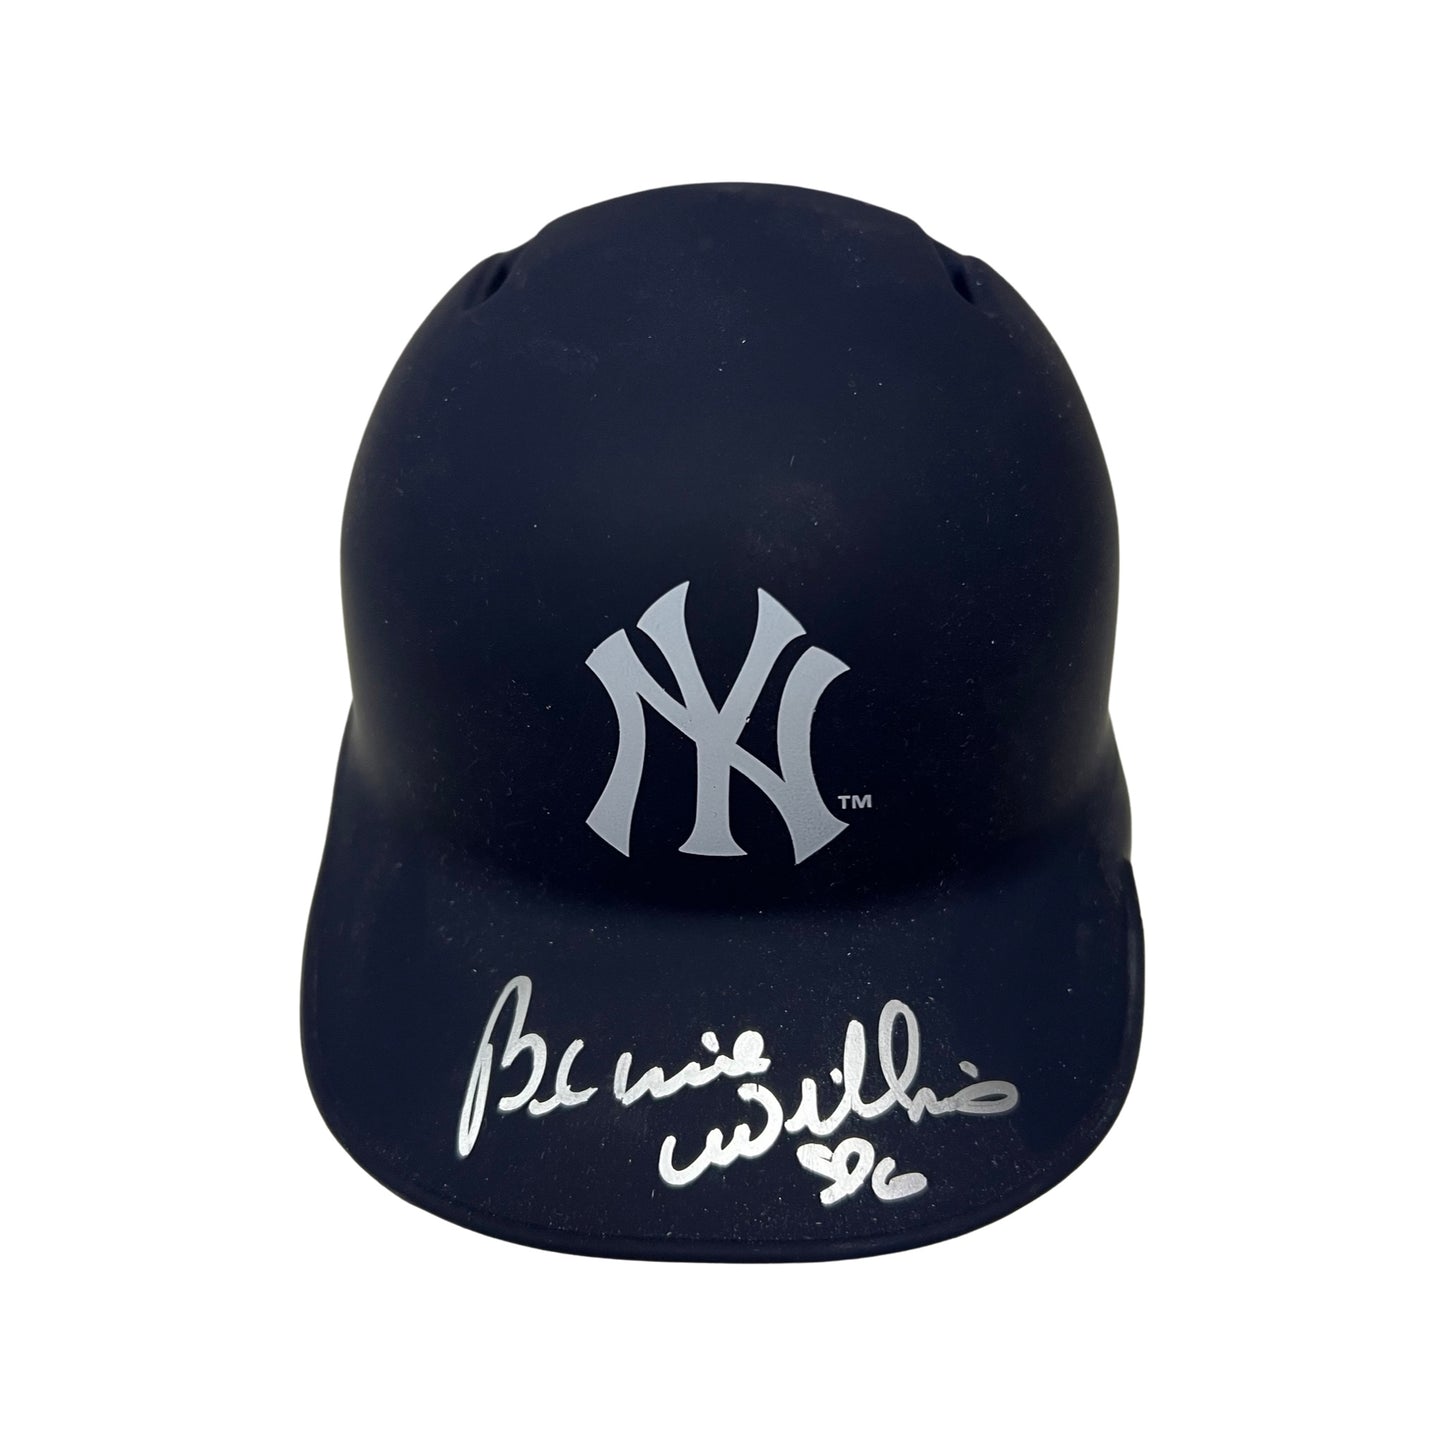 Bernie Williams Autographed New York Yankees Mini Helmet PSA